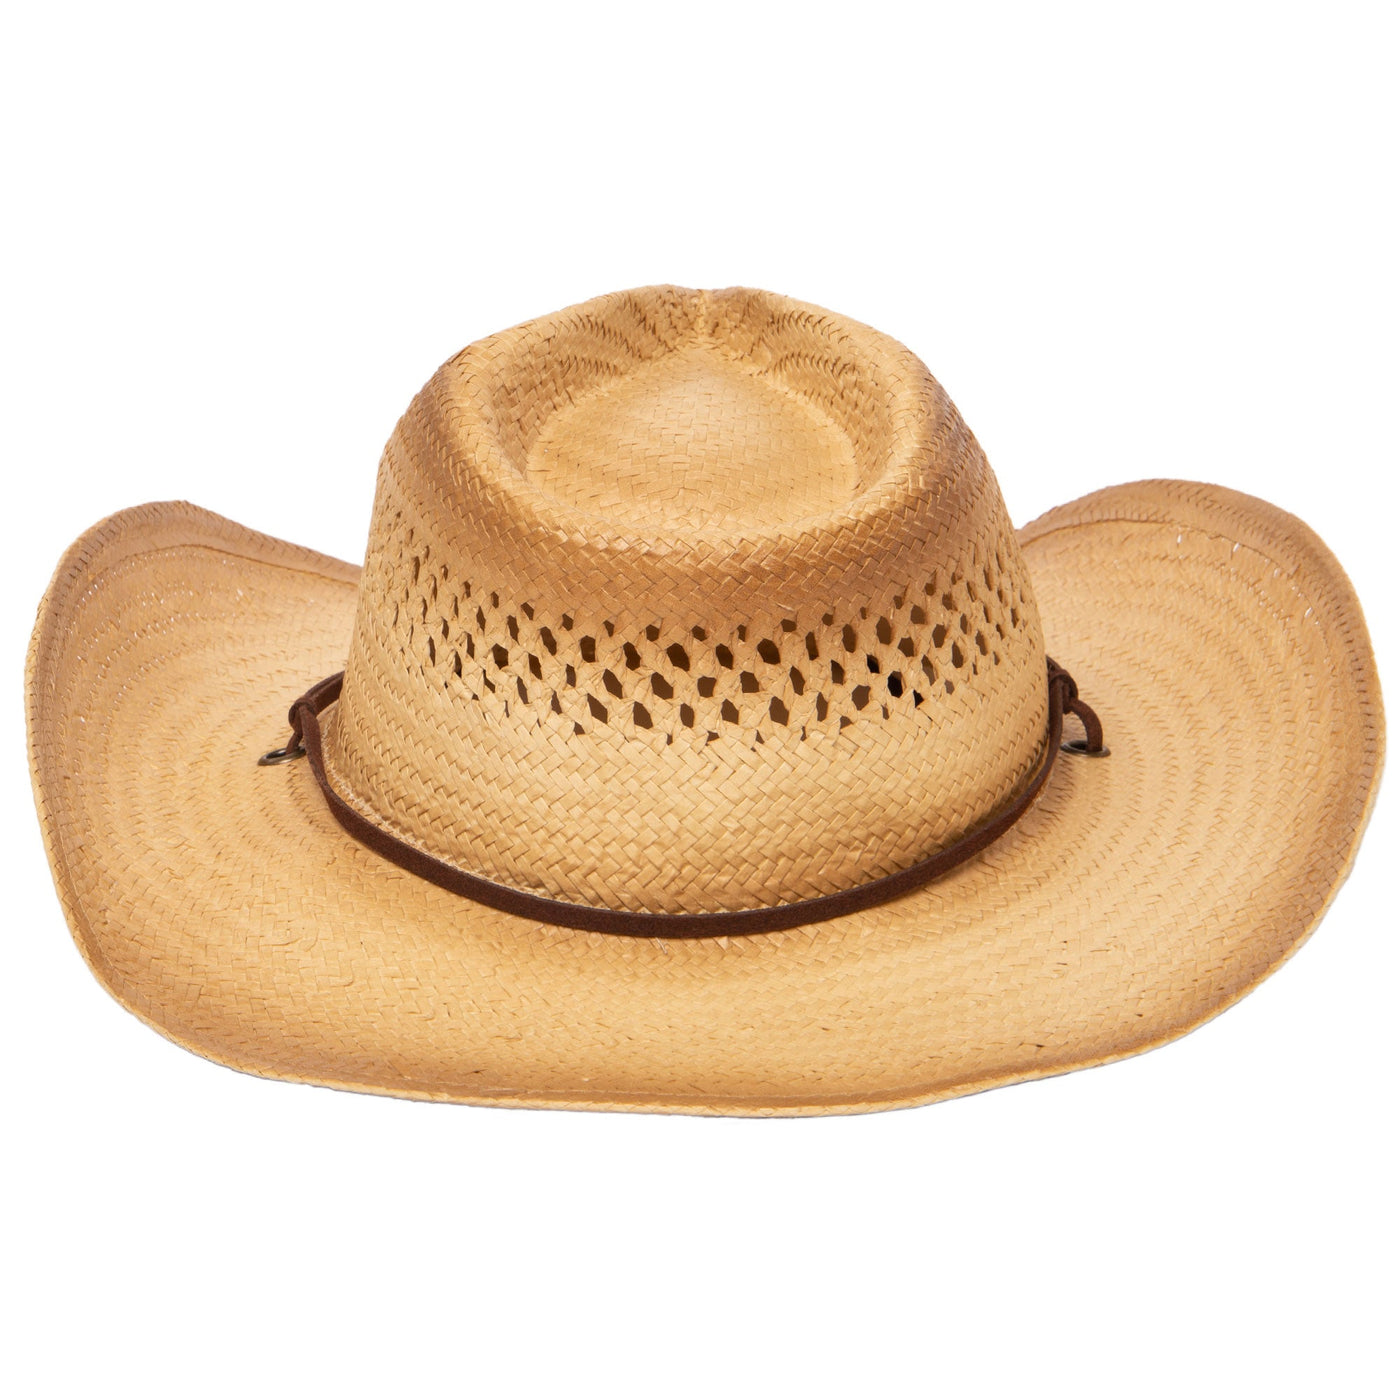 COWBOY - Mens Woven Paper Cowboy Hat With Ventilation